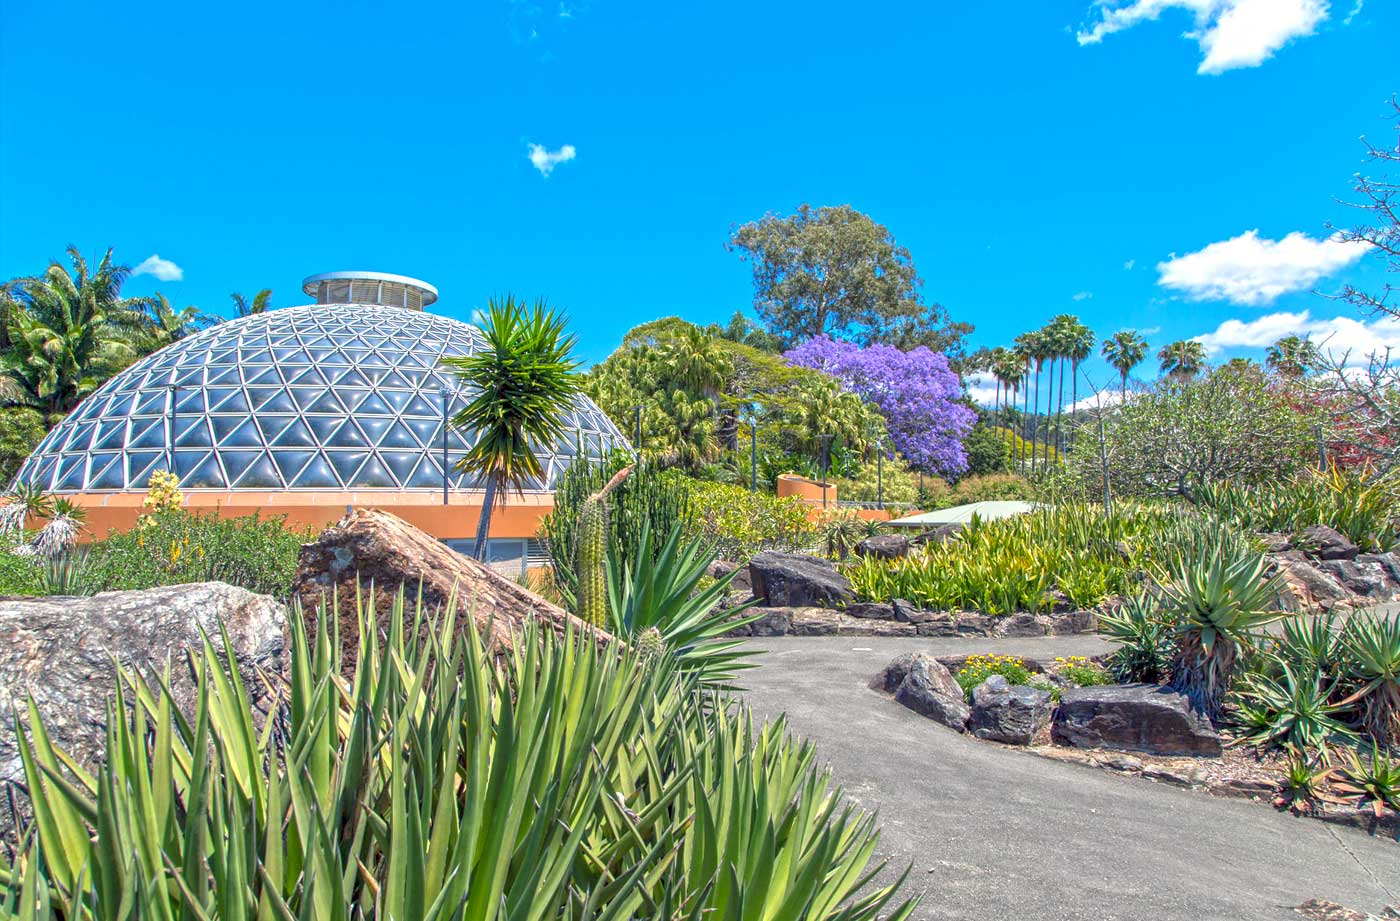 Brisbane Botanic Gardens Mt. Coot-tha